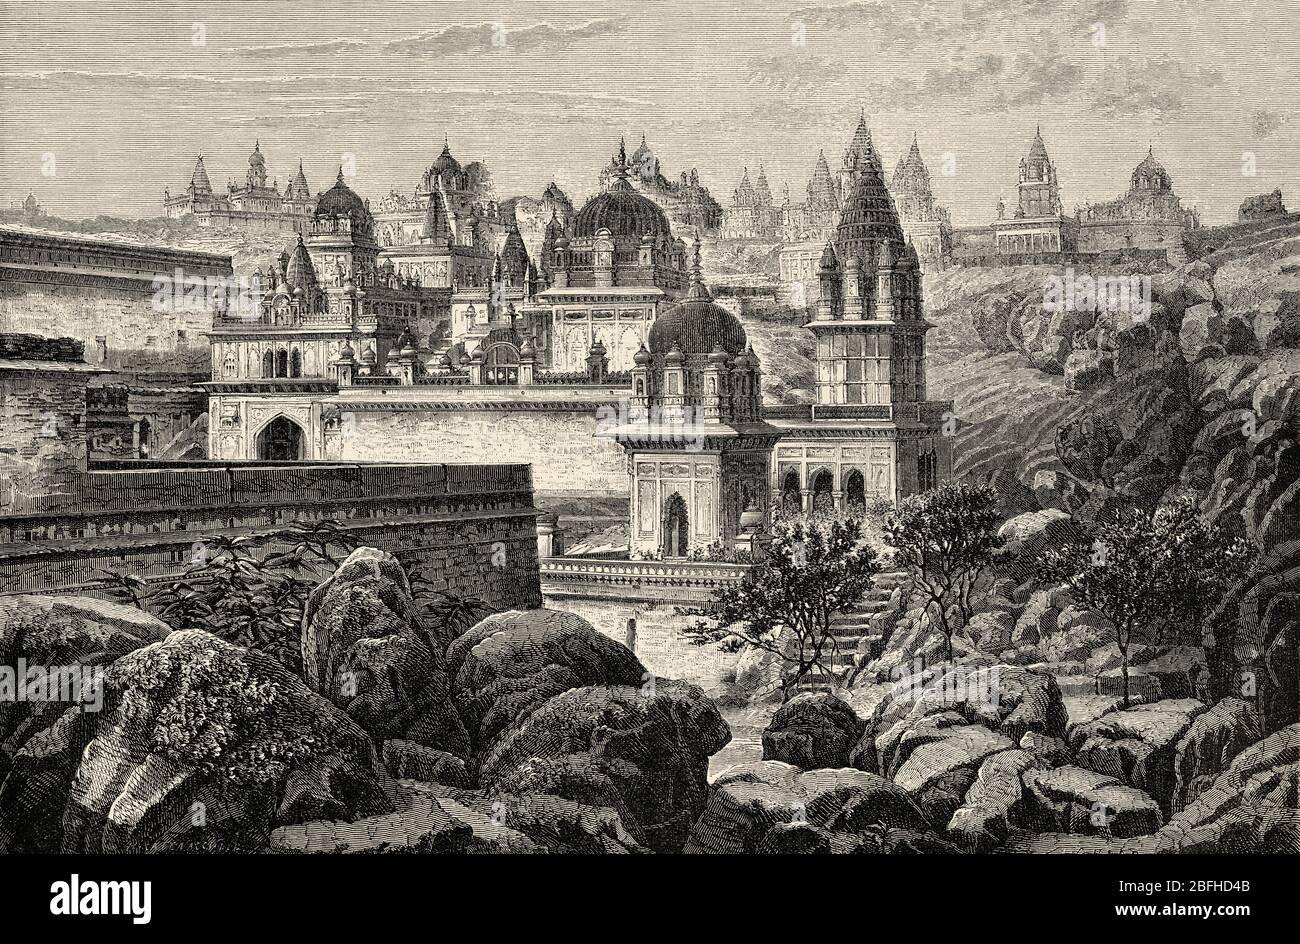 Sounghur heiliger Hügel, Madhya Pradesh Indien. Alte Gravurillustration aus El Mundo en la Mano 1878 Stockfoto